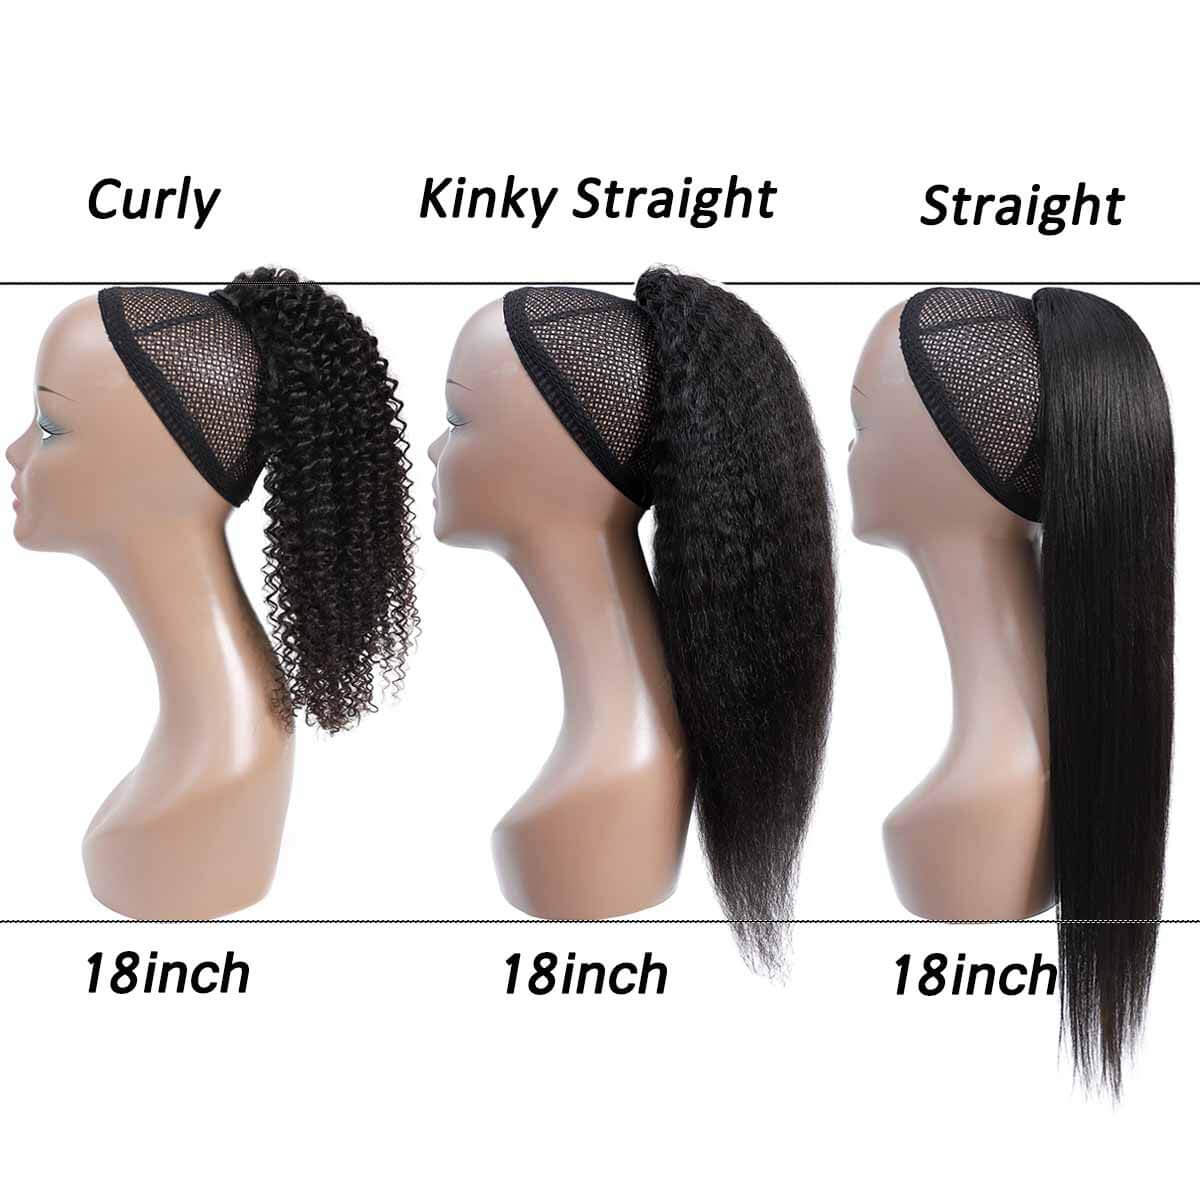 straight kinky Straight curly Length comparison